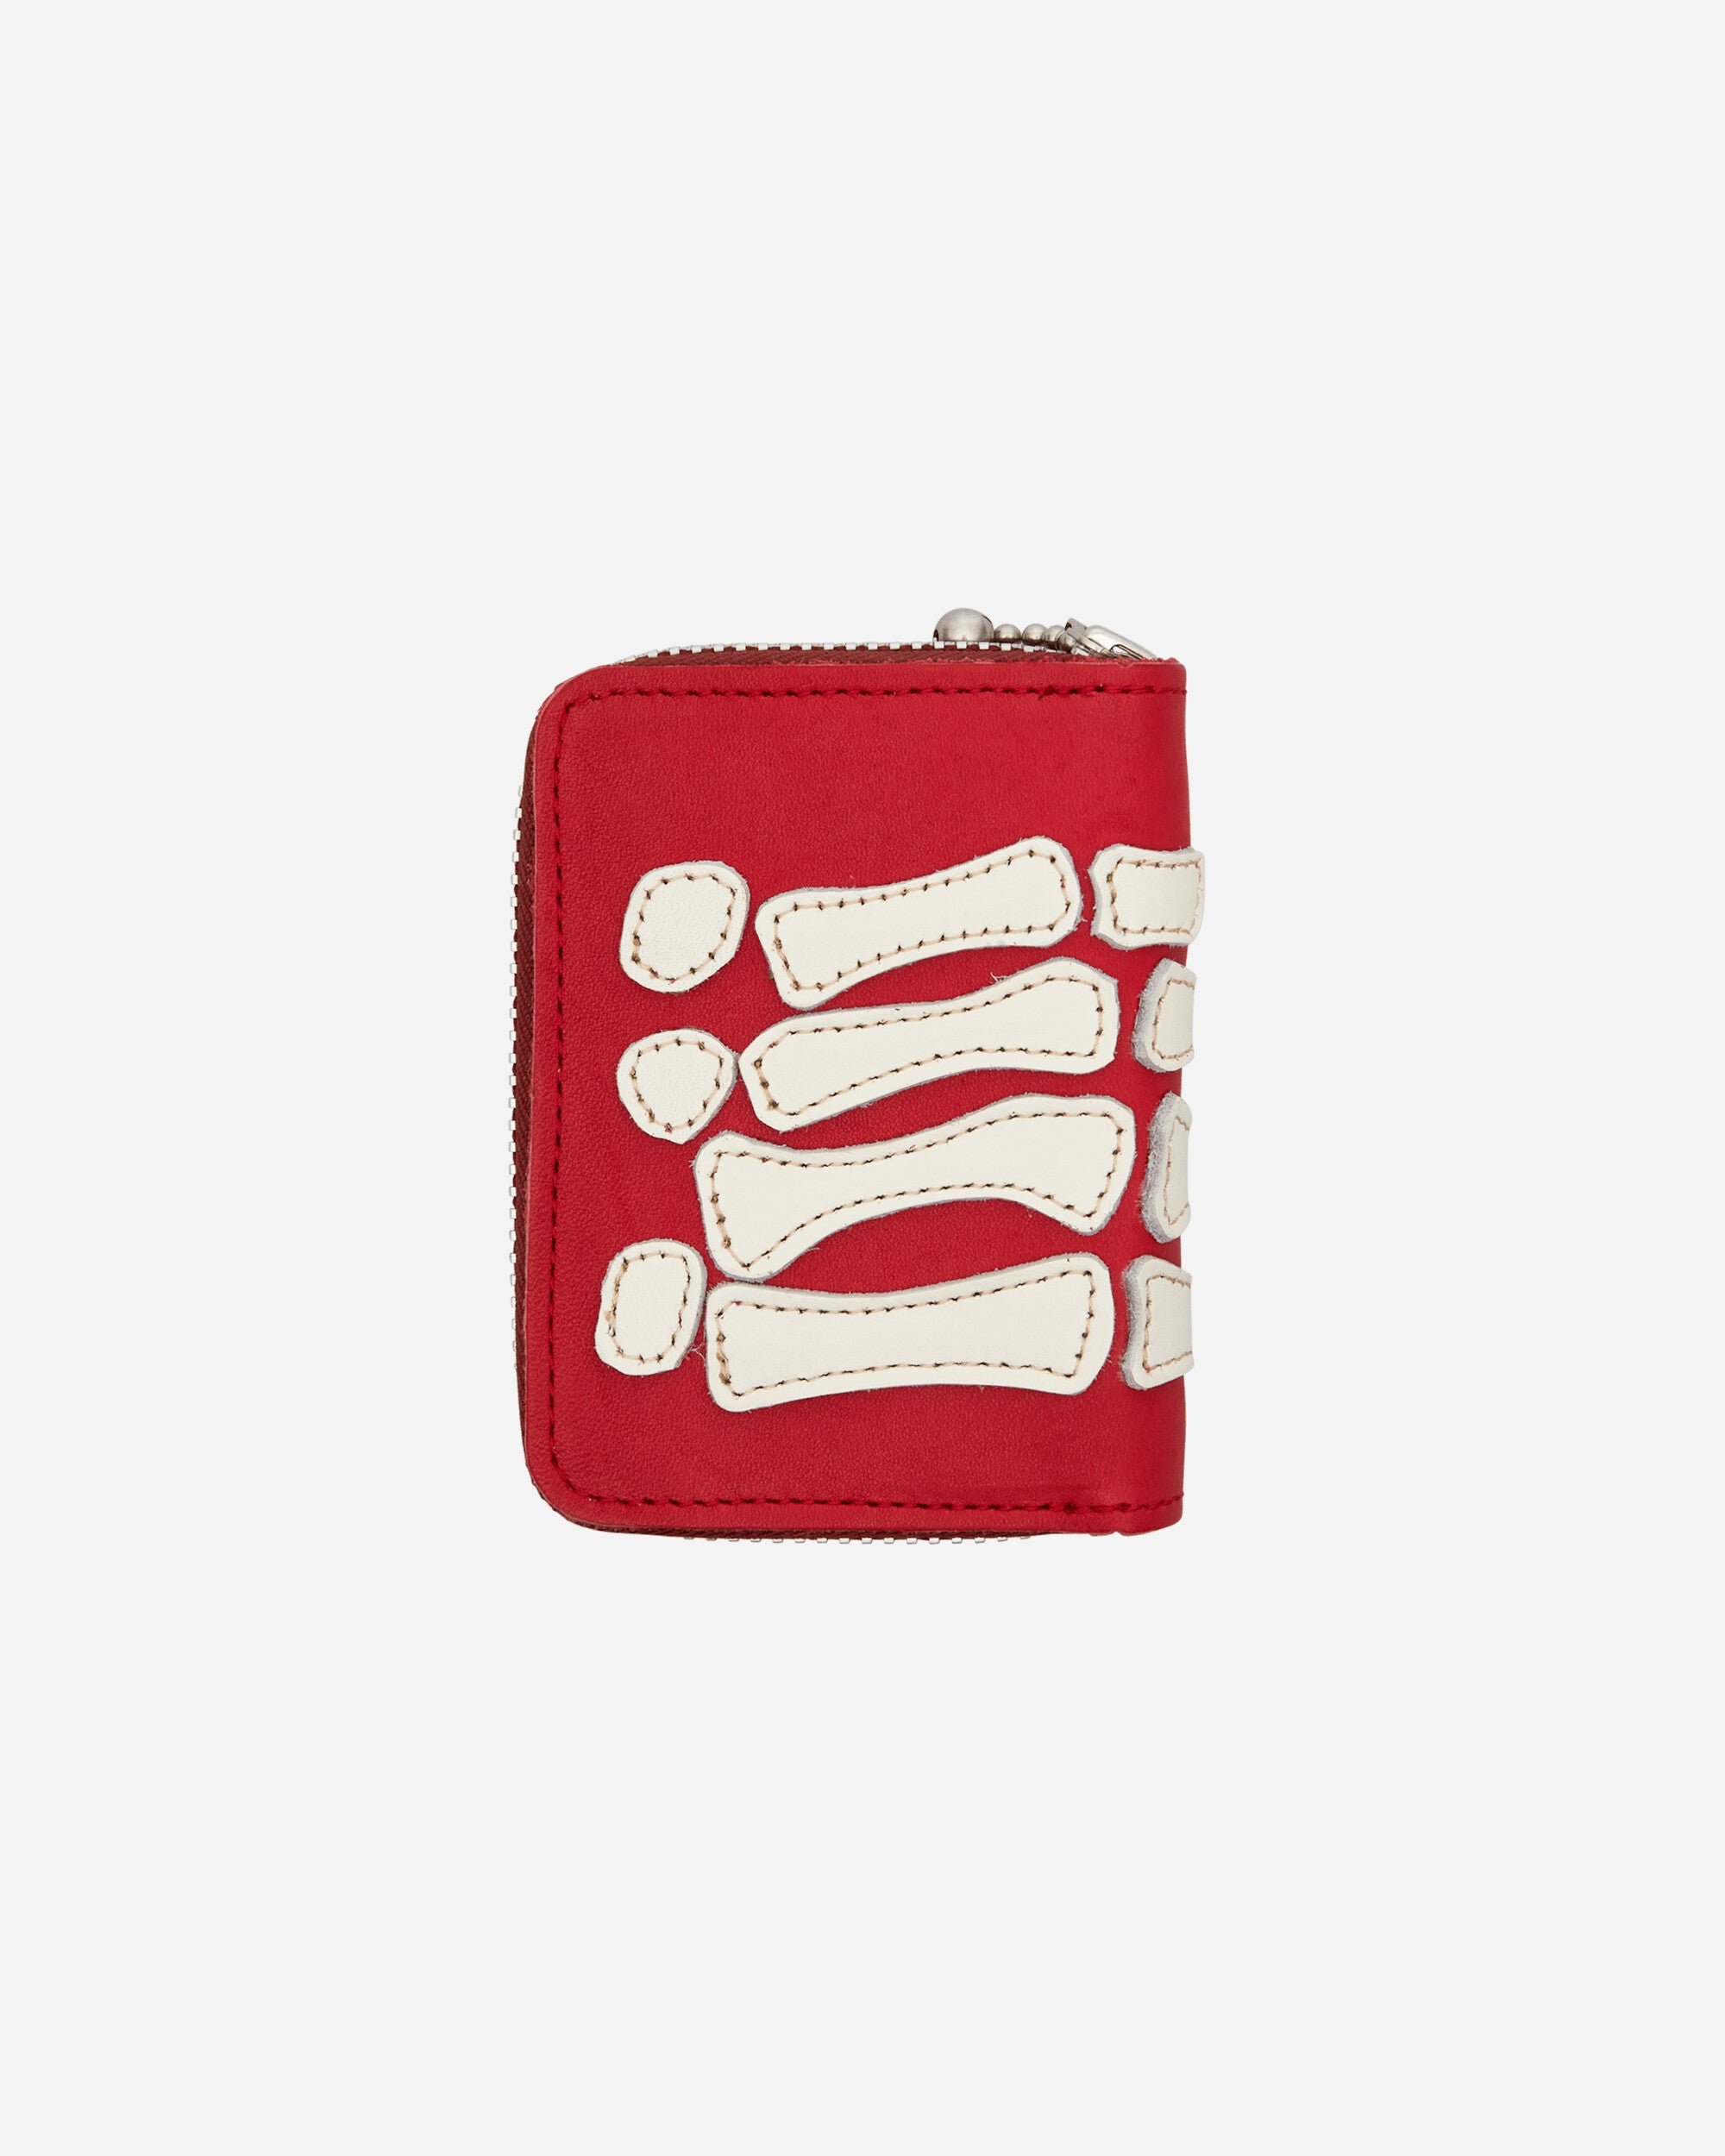 KAPITAL Thumbs-Up Bone Hand Zip Mini Wallet Red Wallets and Cardholders Wallets EK-1401XG RED